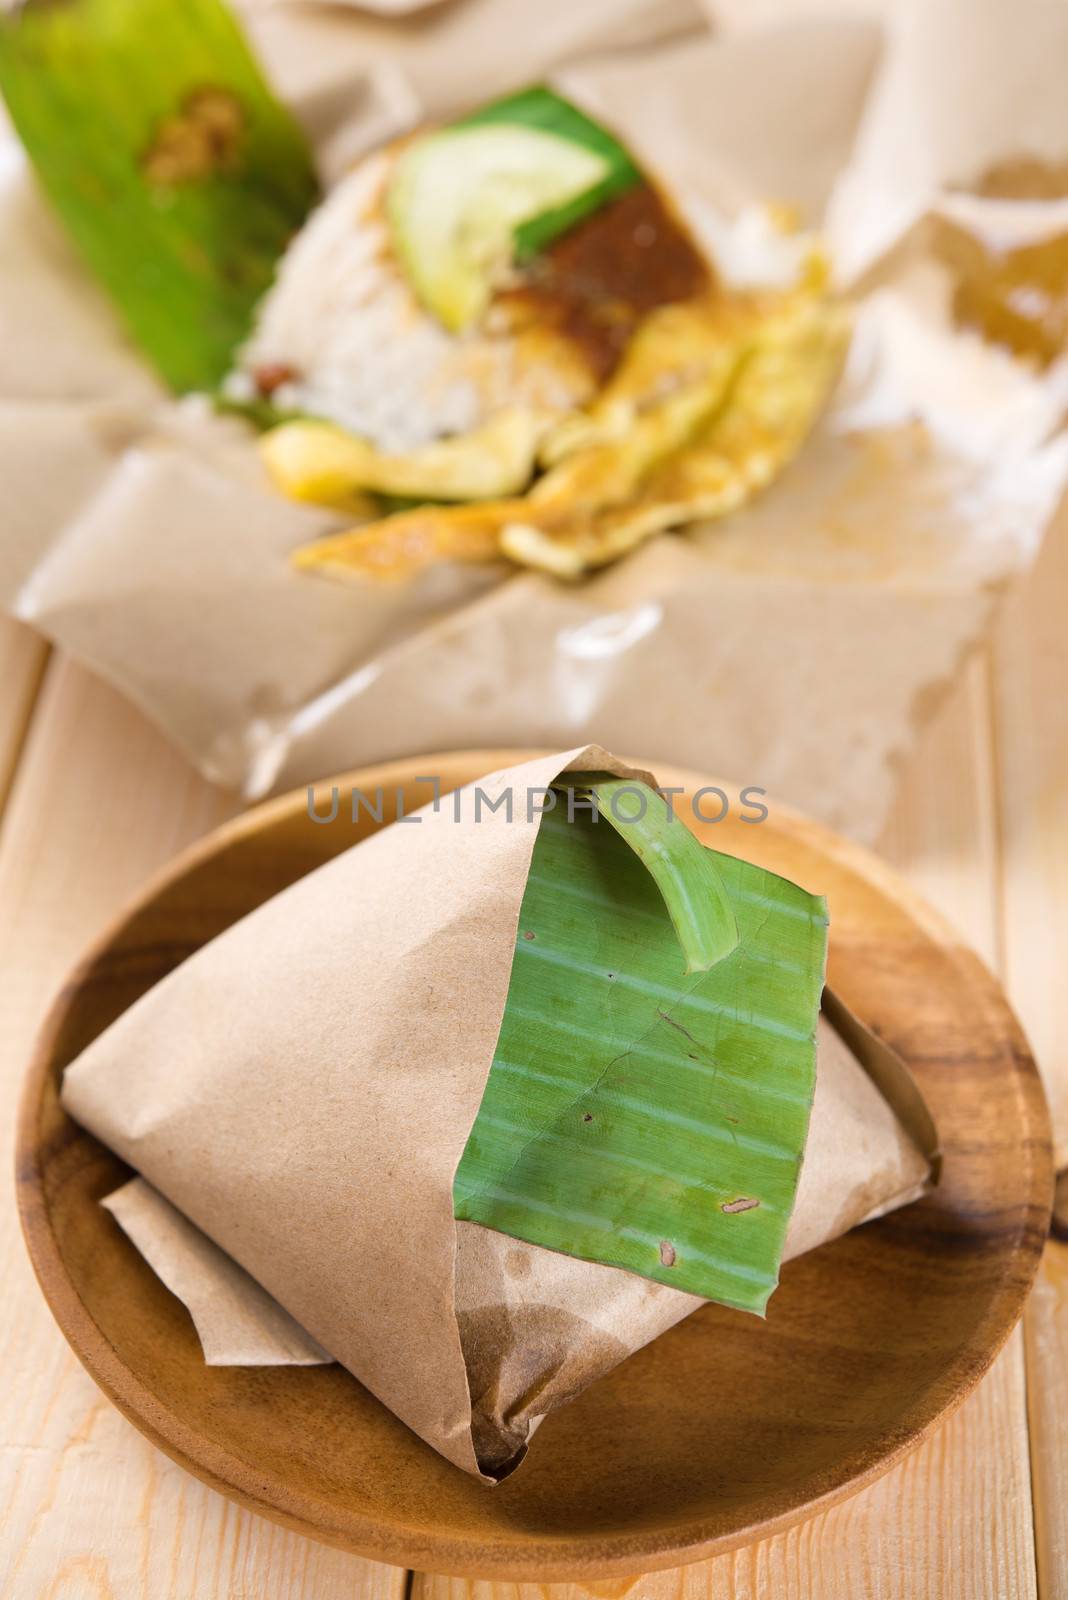 Nasi lemak - traditional Malaysian breakfast on banana leaf